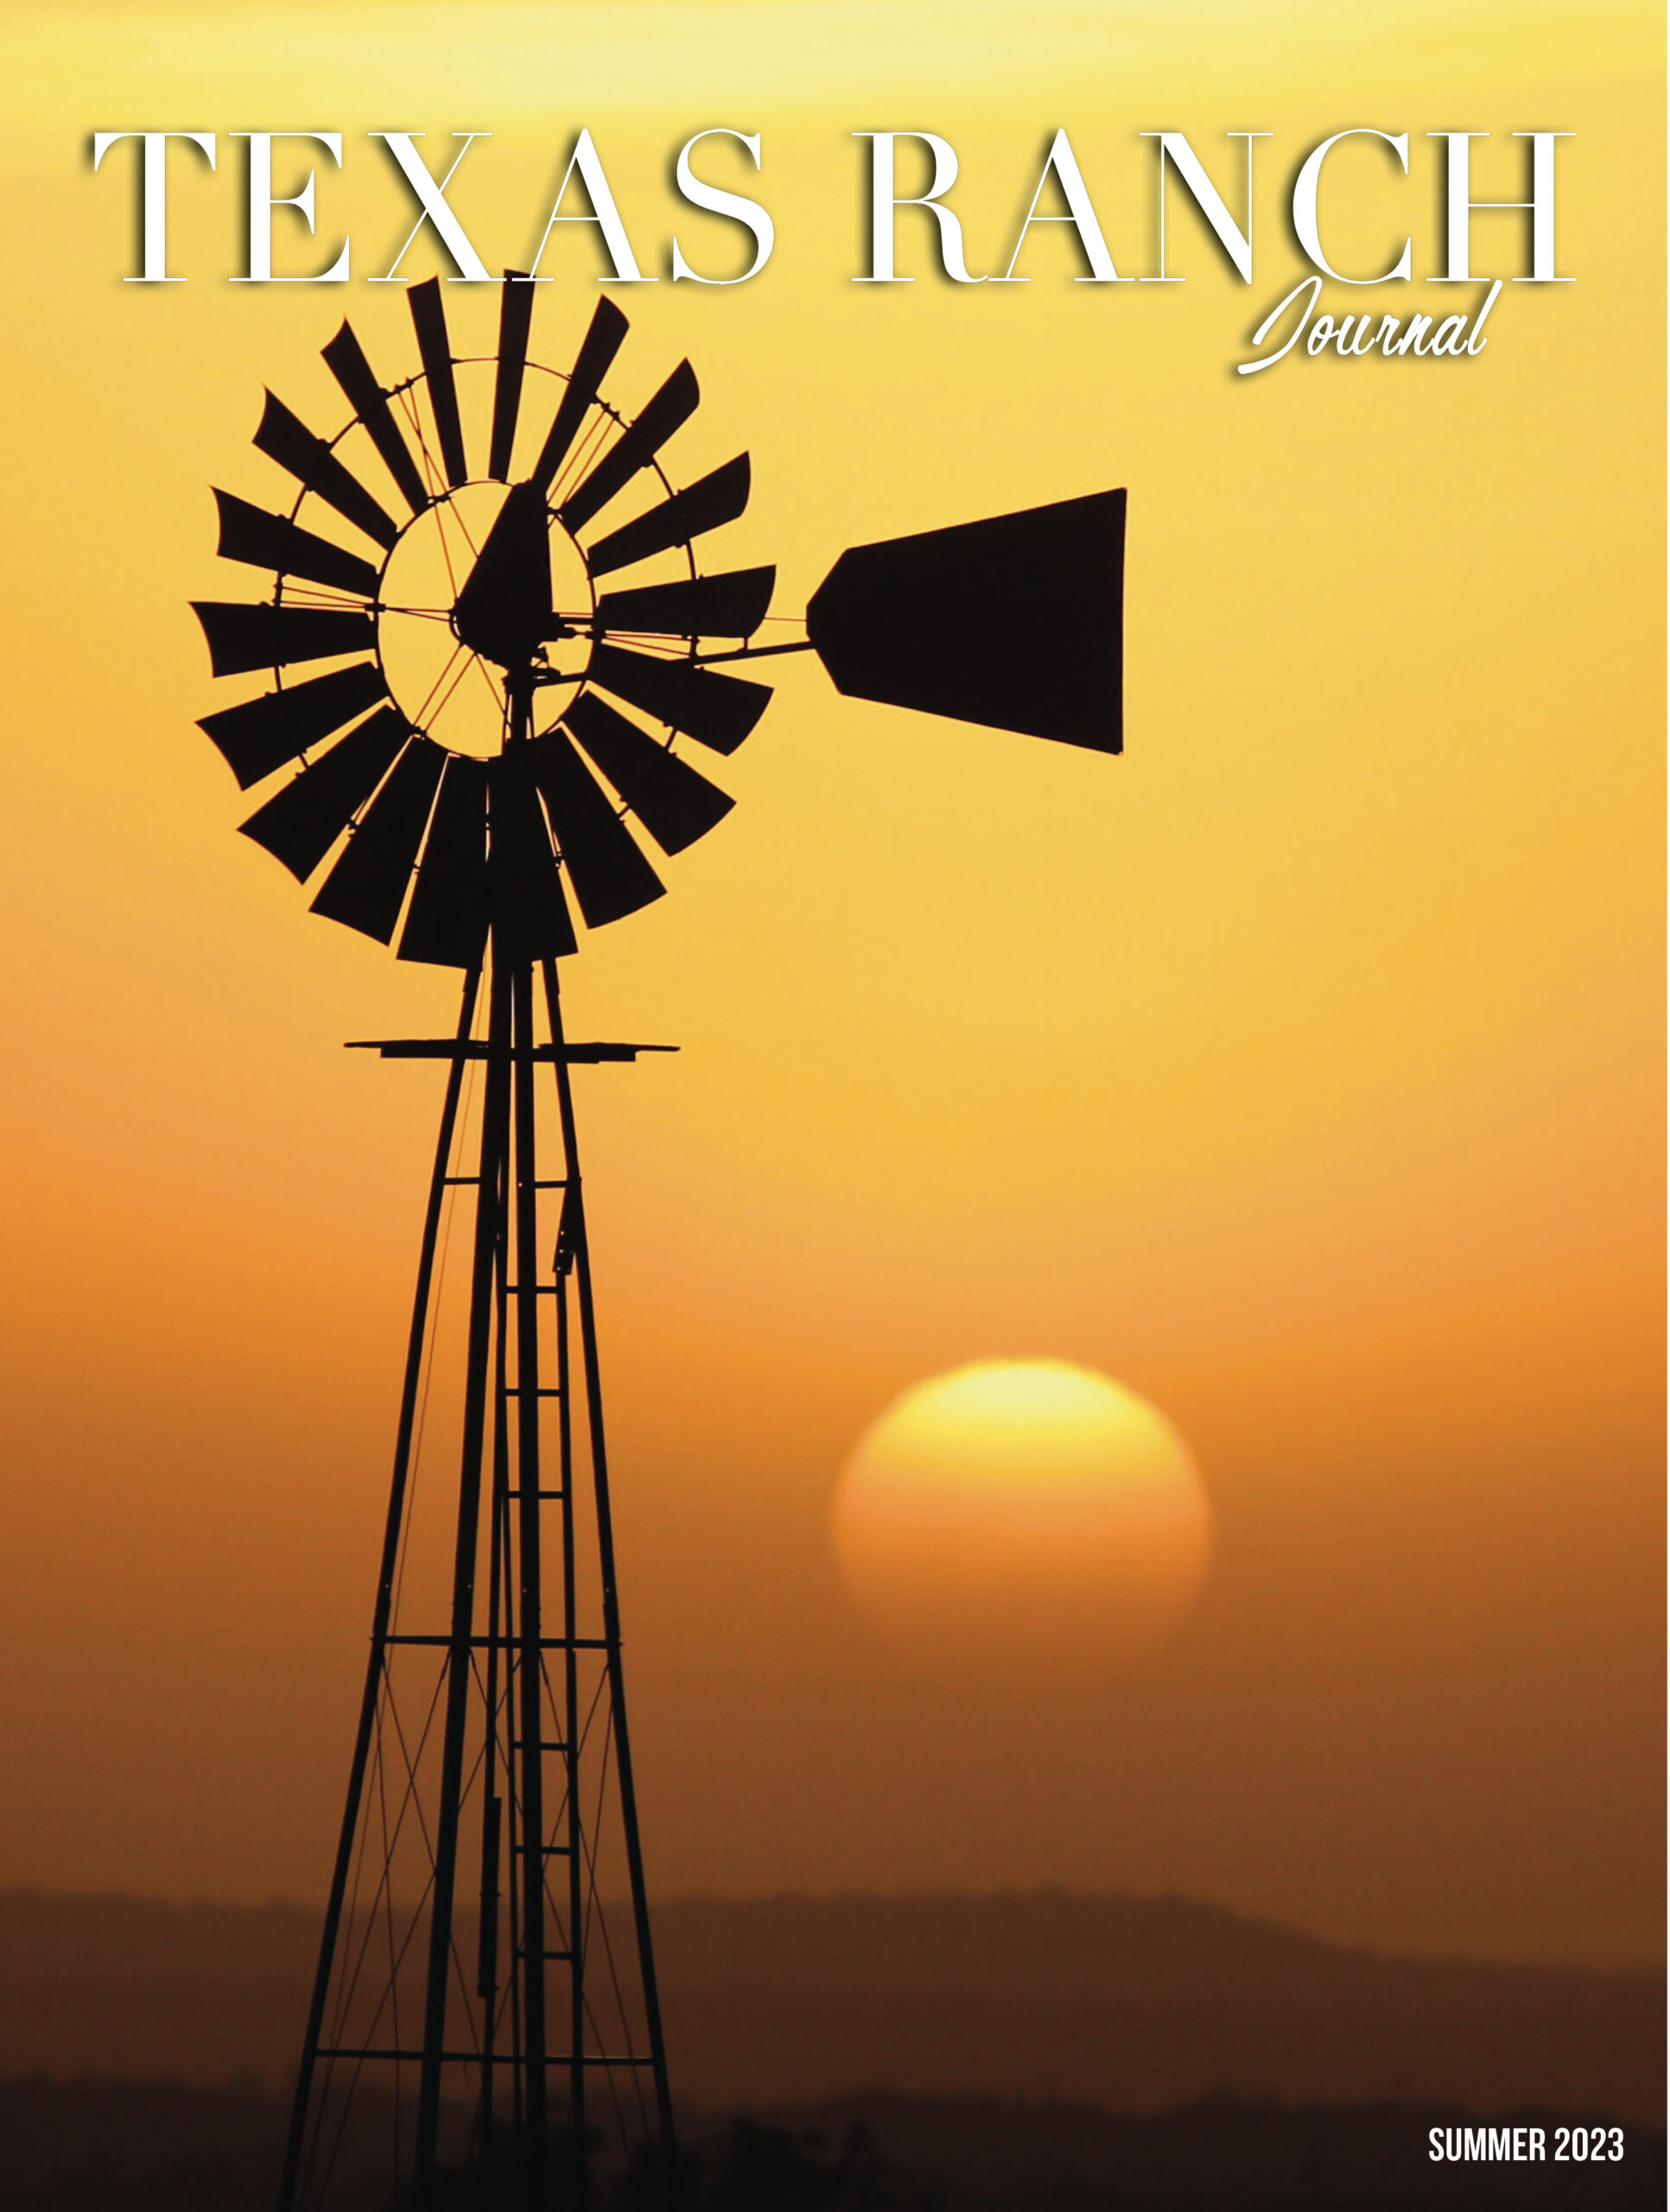 Texas Ranch Journal Summer 2023 Cover